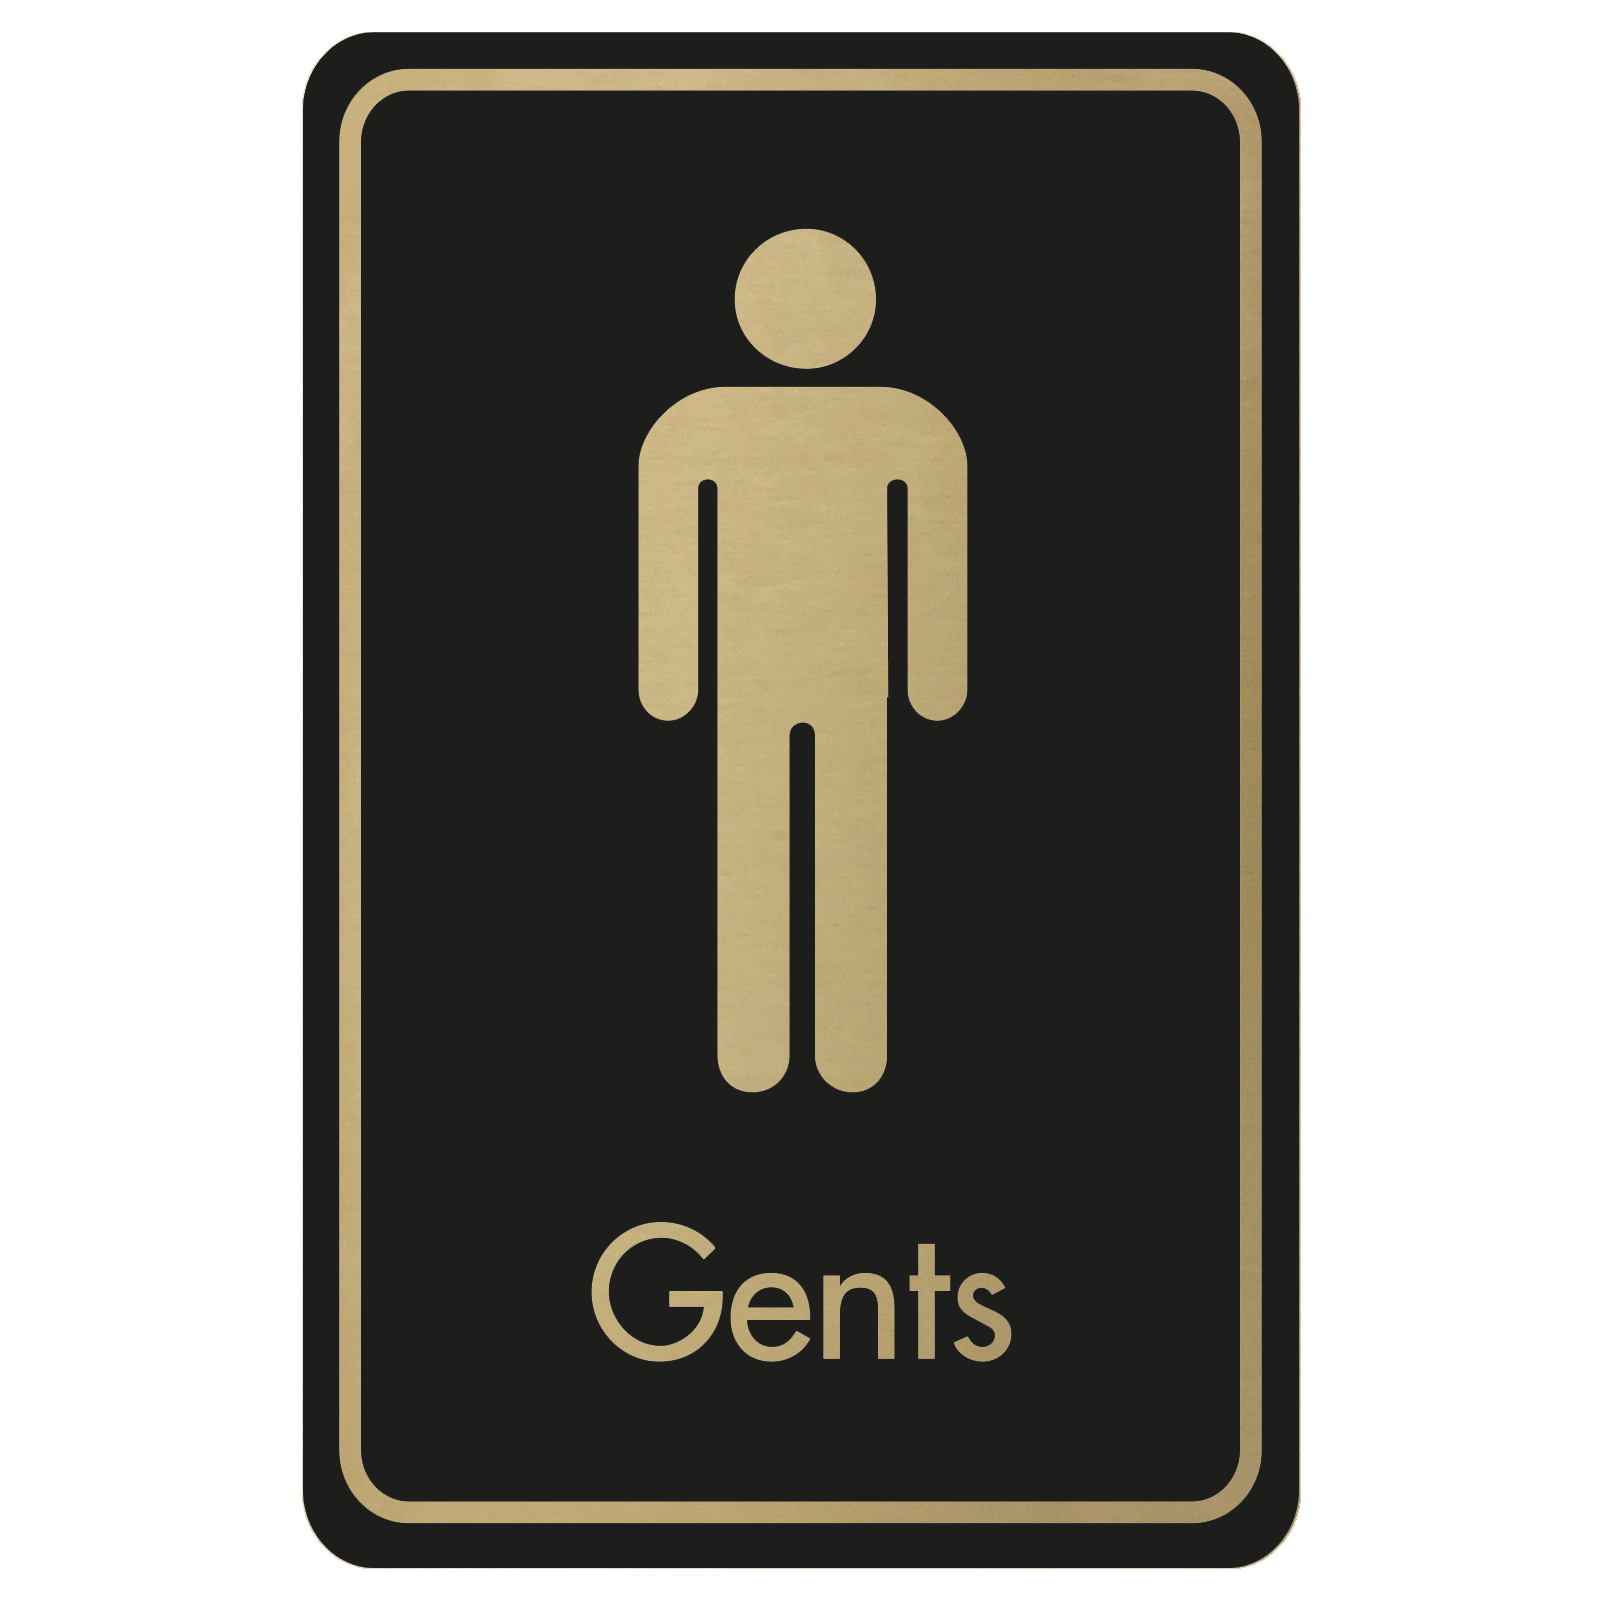 Large Gents Door Sign - Gold on Black